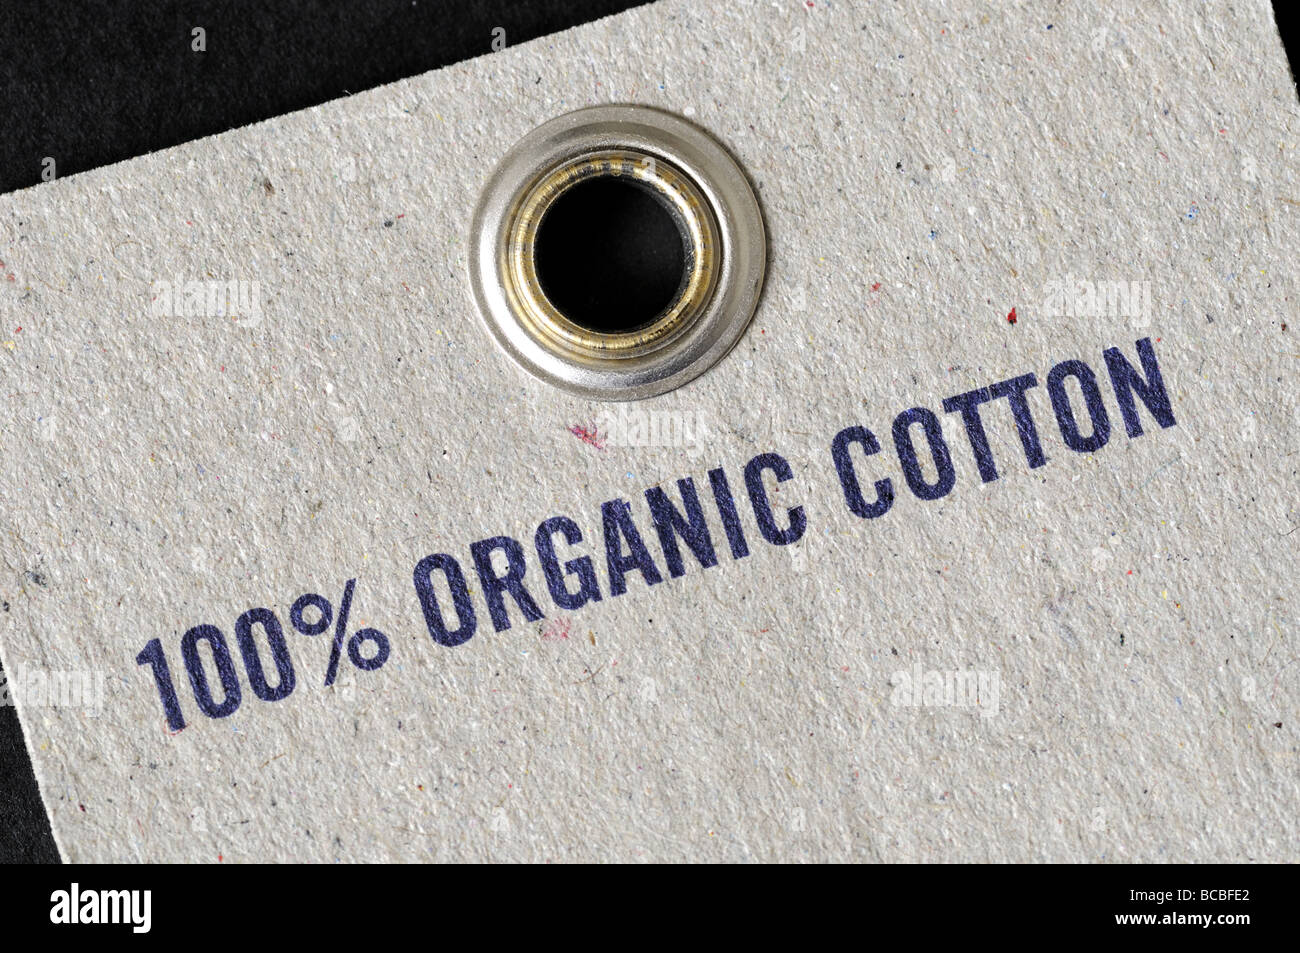 100 Organic Cotton printed on label Stock Photo